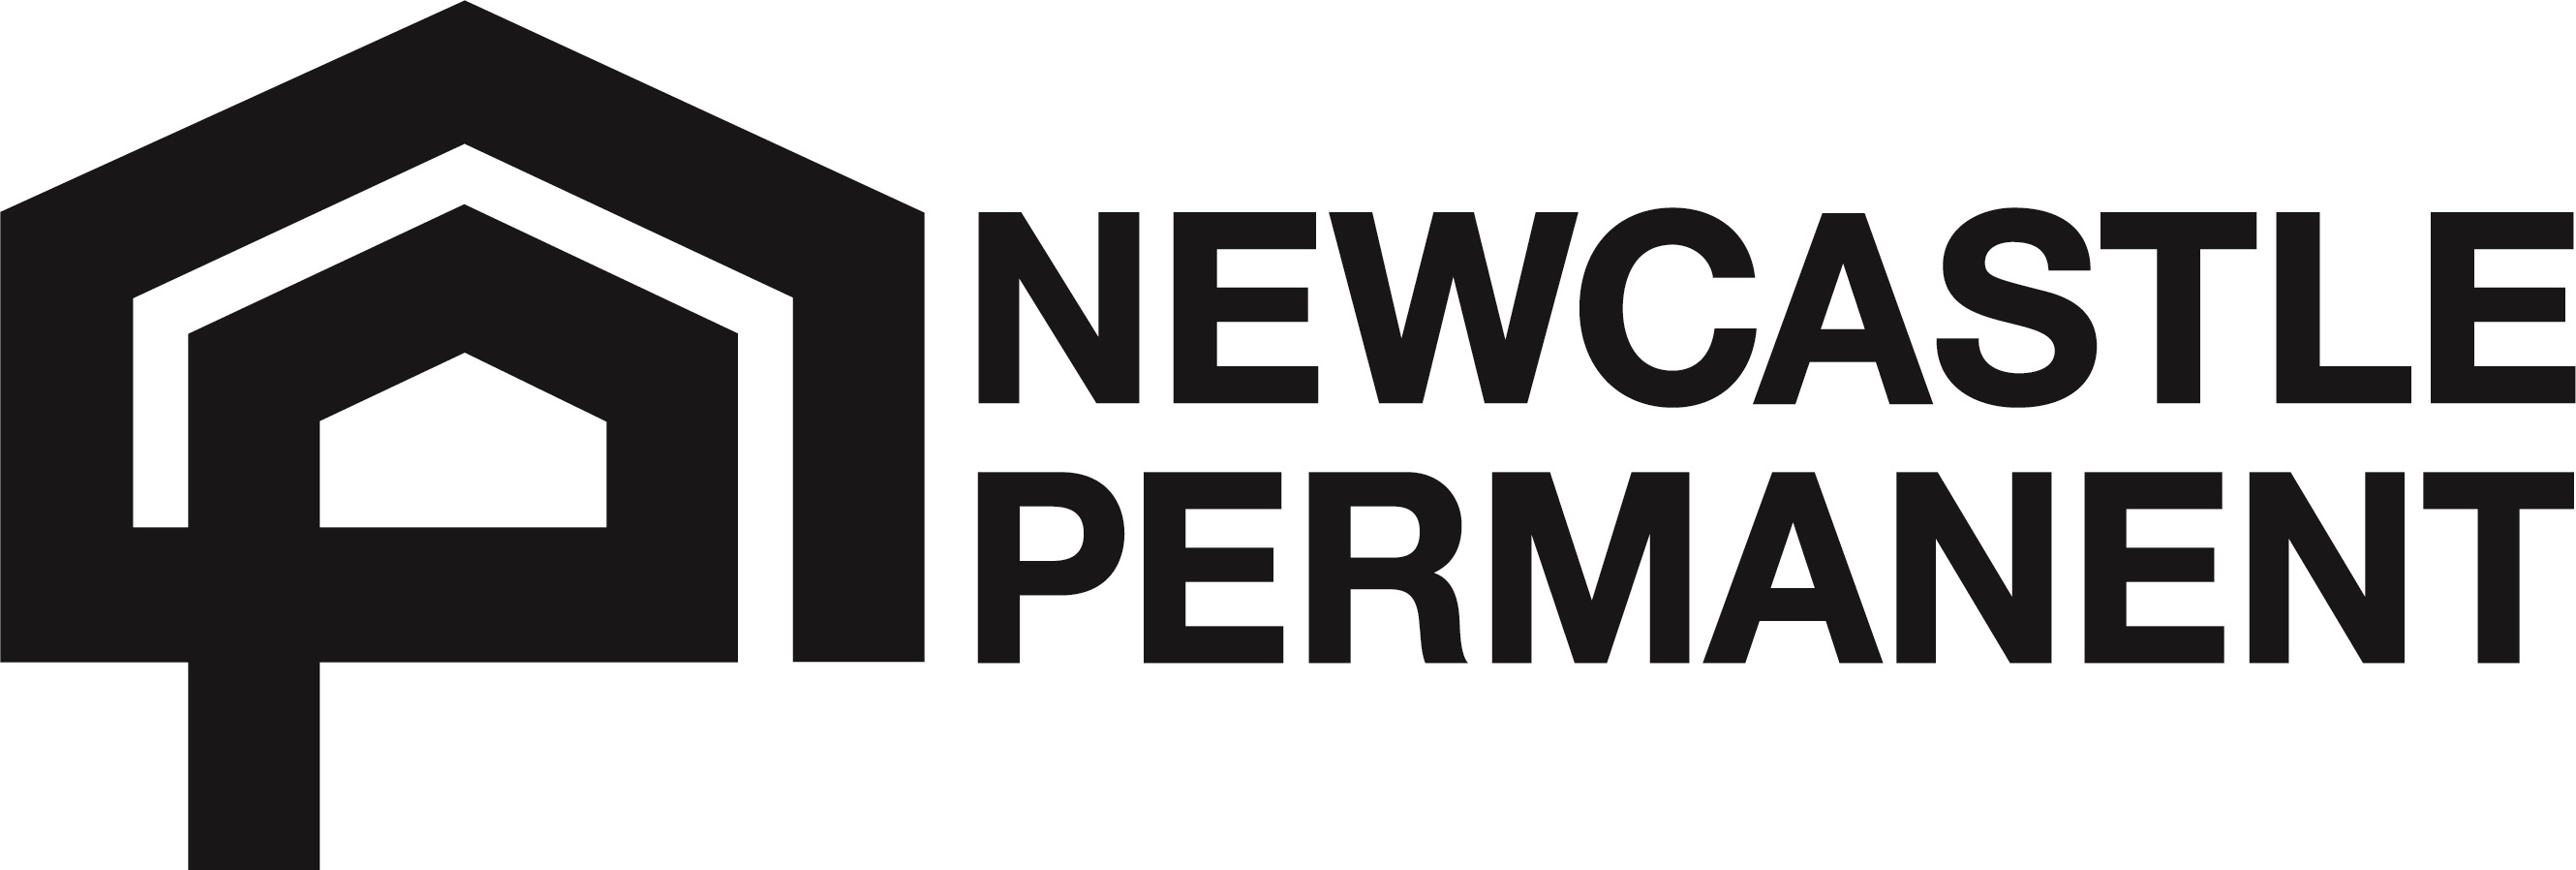 Newcatle-Permanent-Black-Logo.jpg